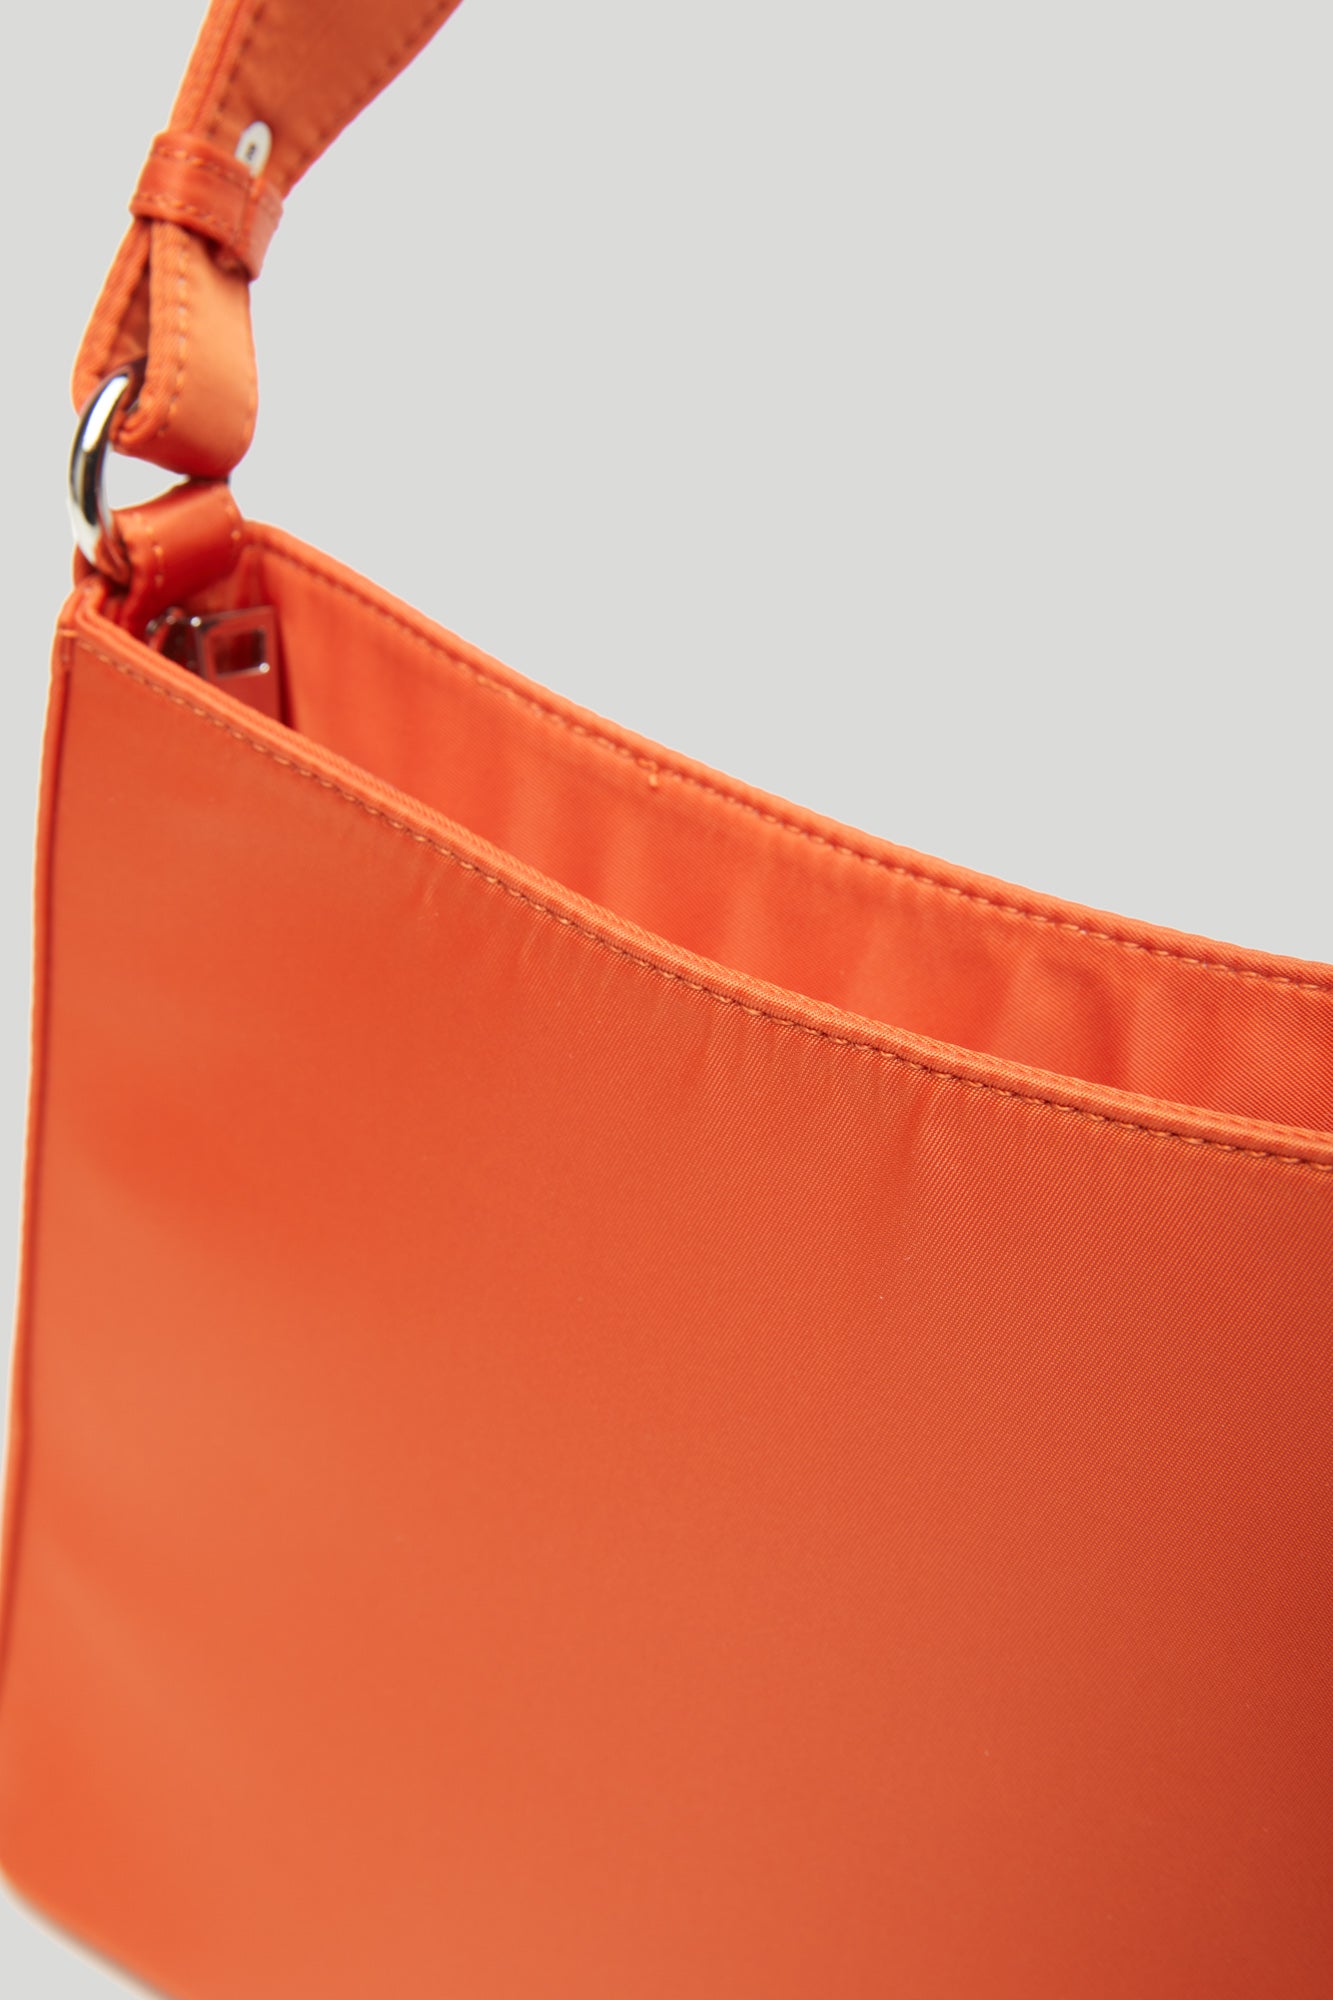 HVISK Amble Bag in Red Recycled Nylon